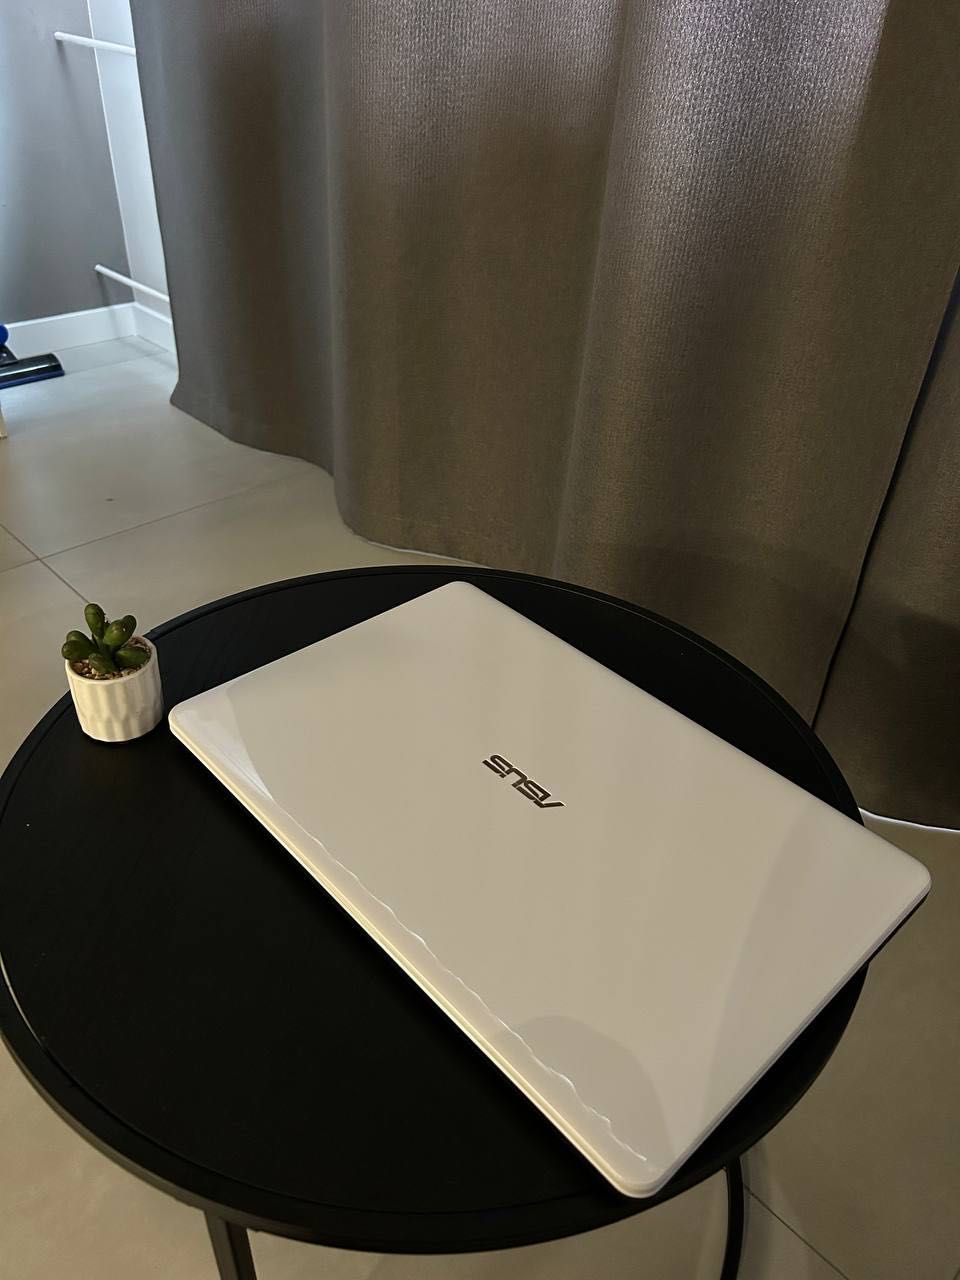 Asus Vivo UltraBook D705